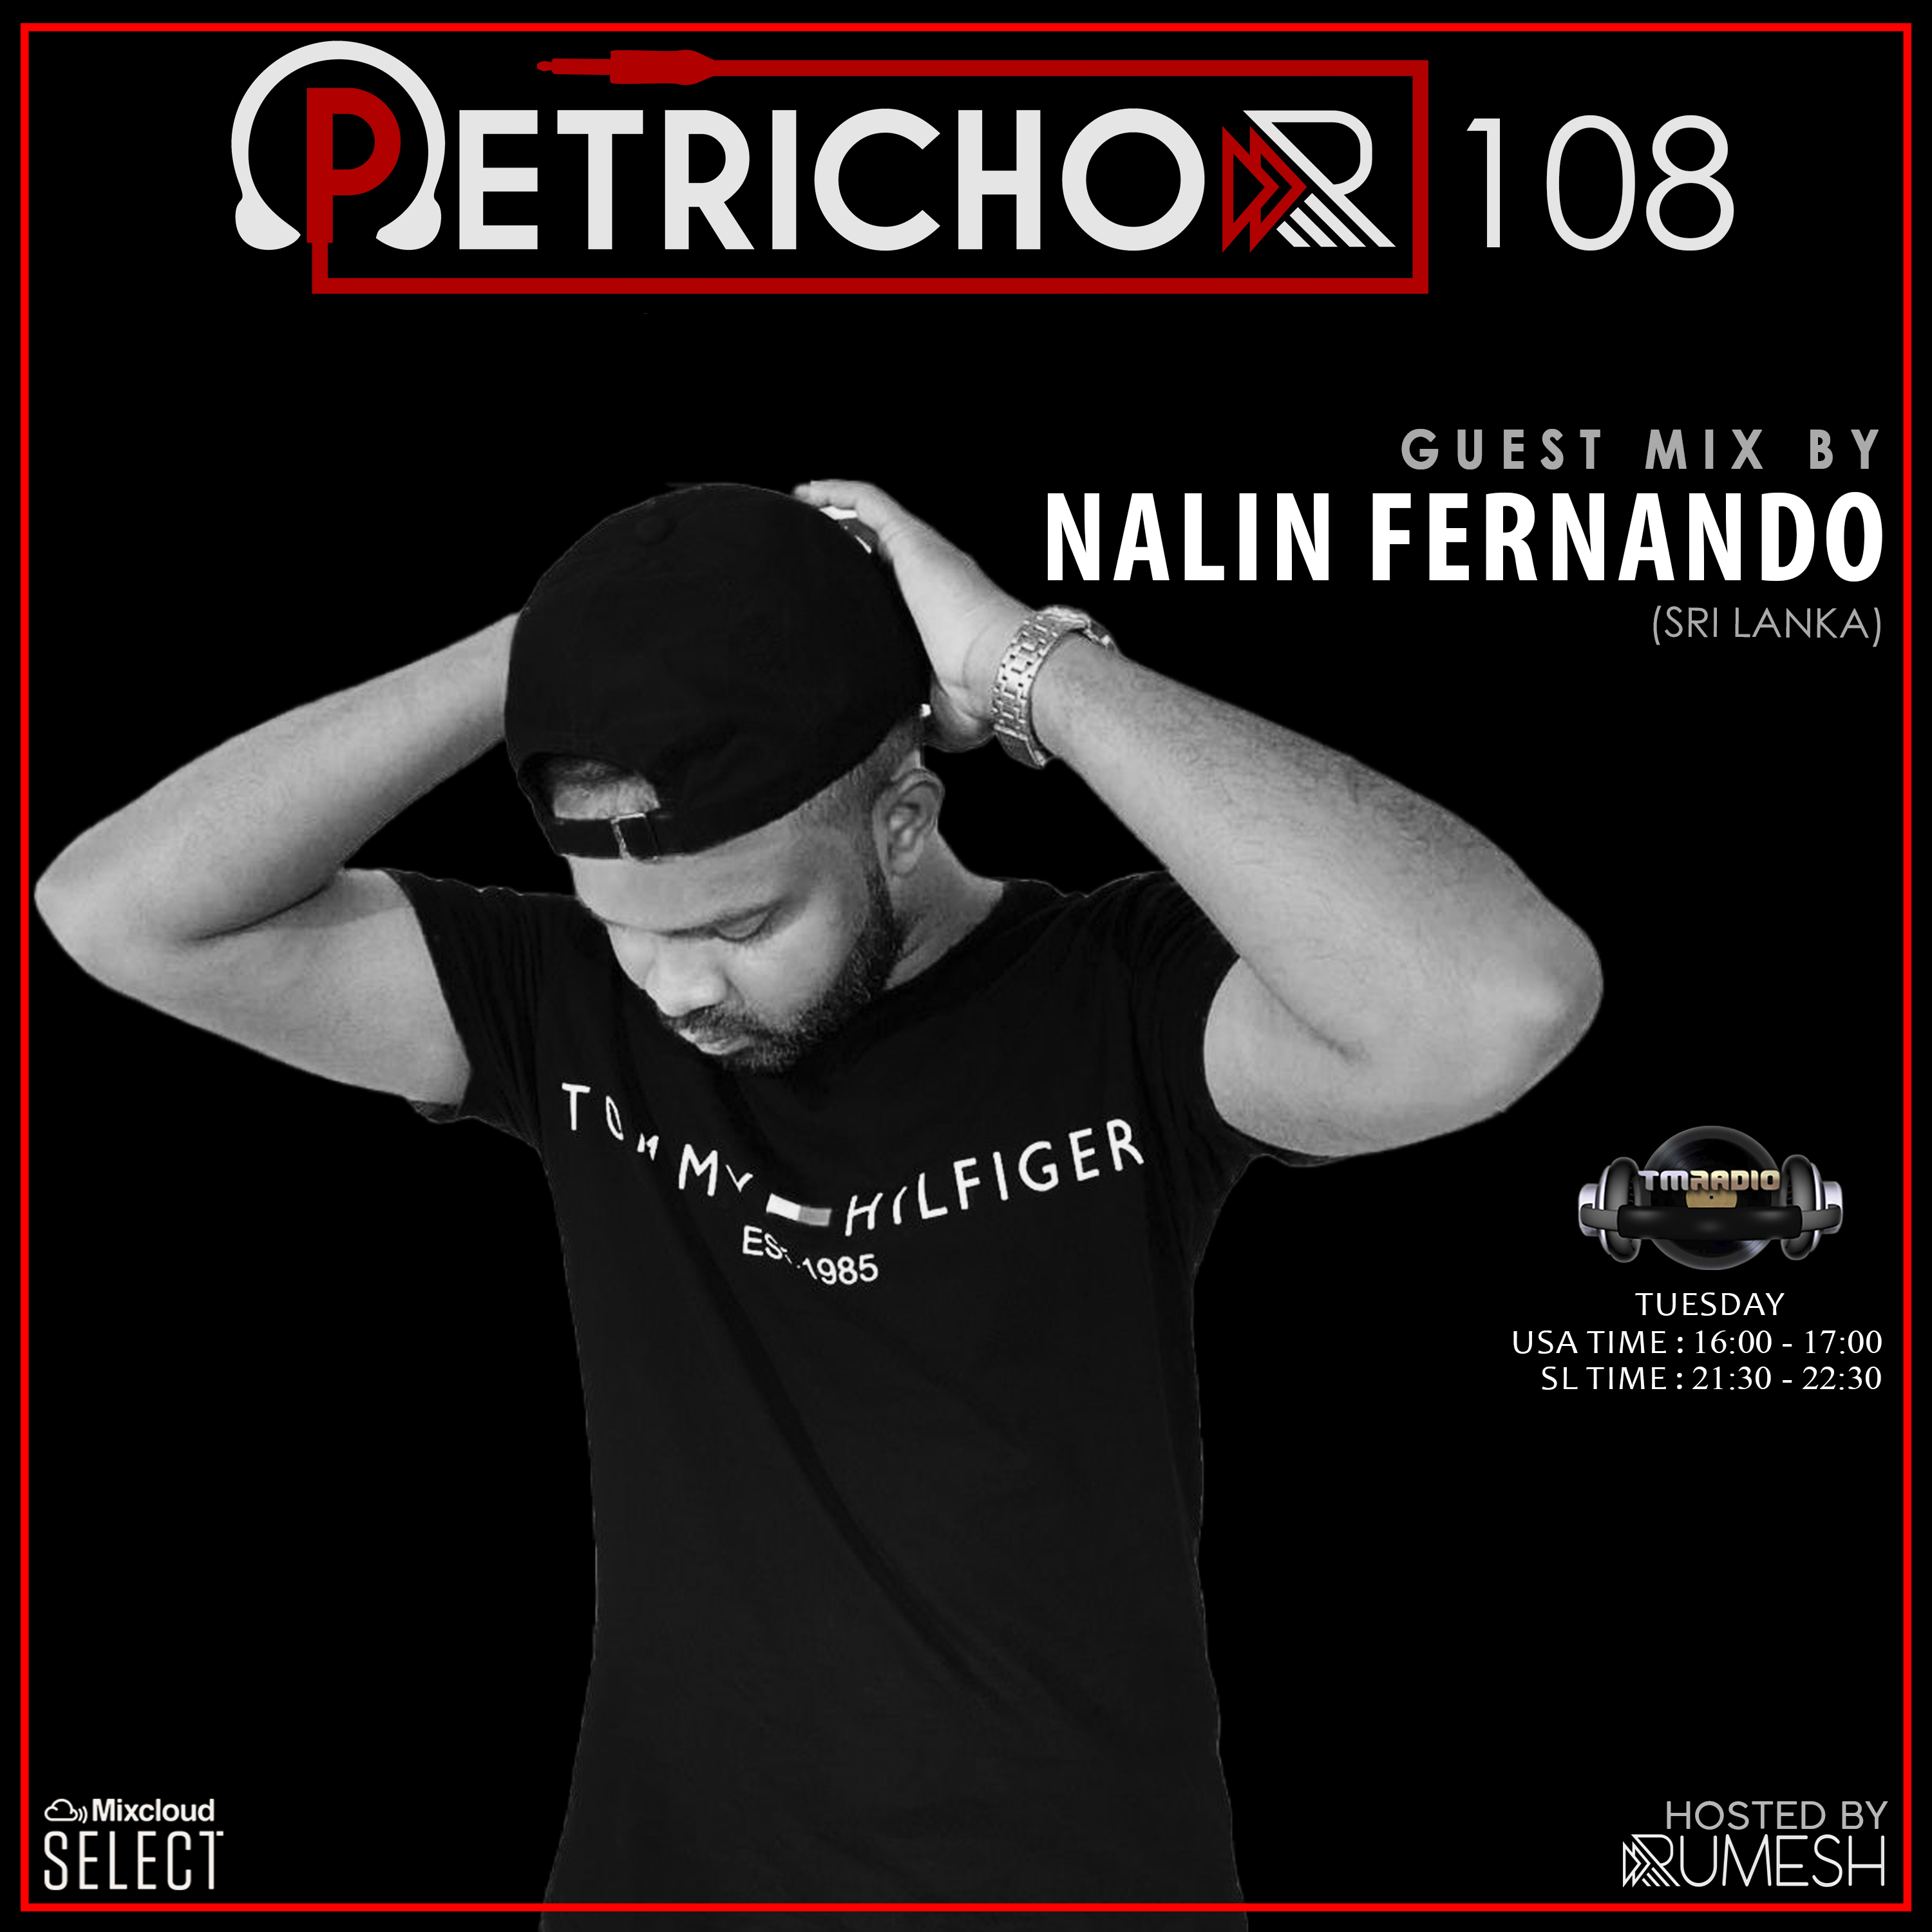 Petrichor :: Petrichor 108 Guest Mix by Nalin Fernando (Sri Lanka) (aired on May 31st) banner logo